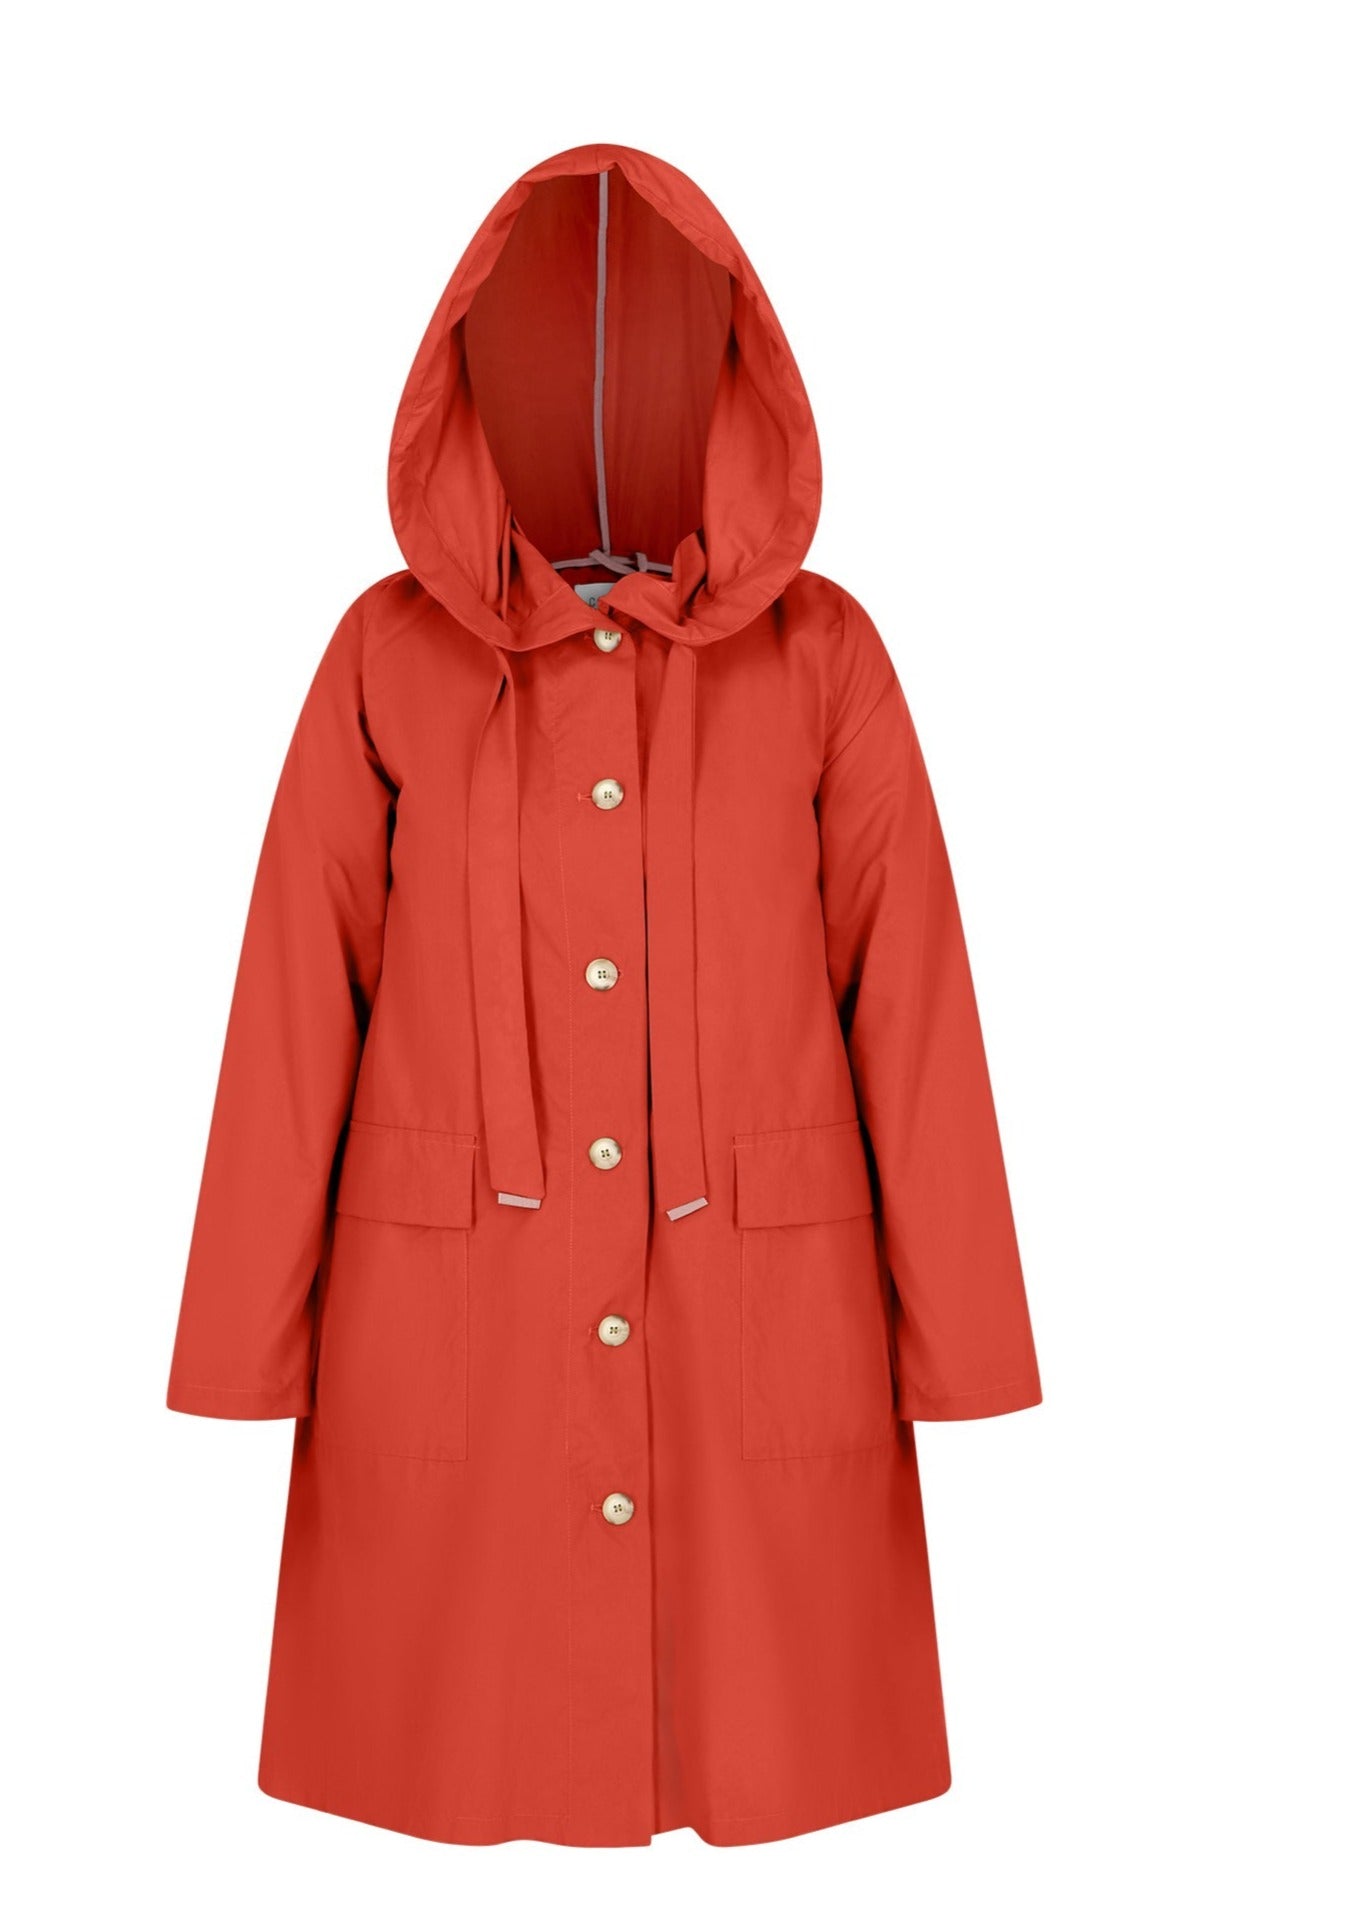 The classic raincoat - orange color - front view